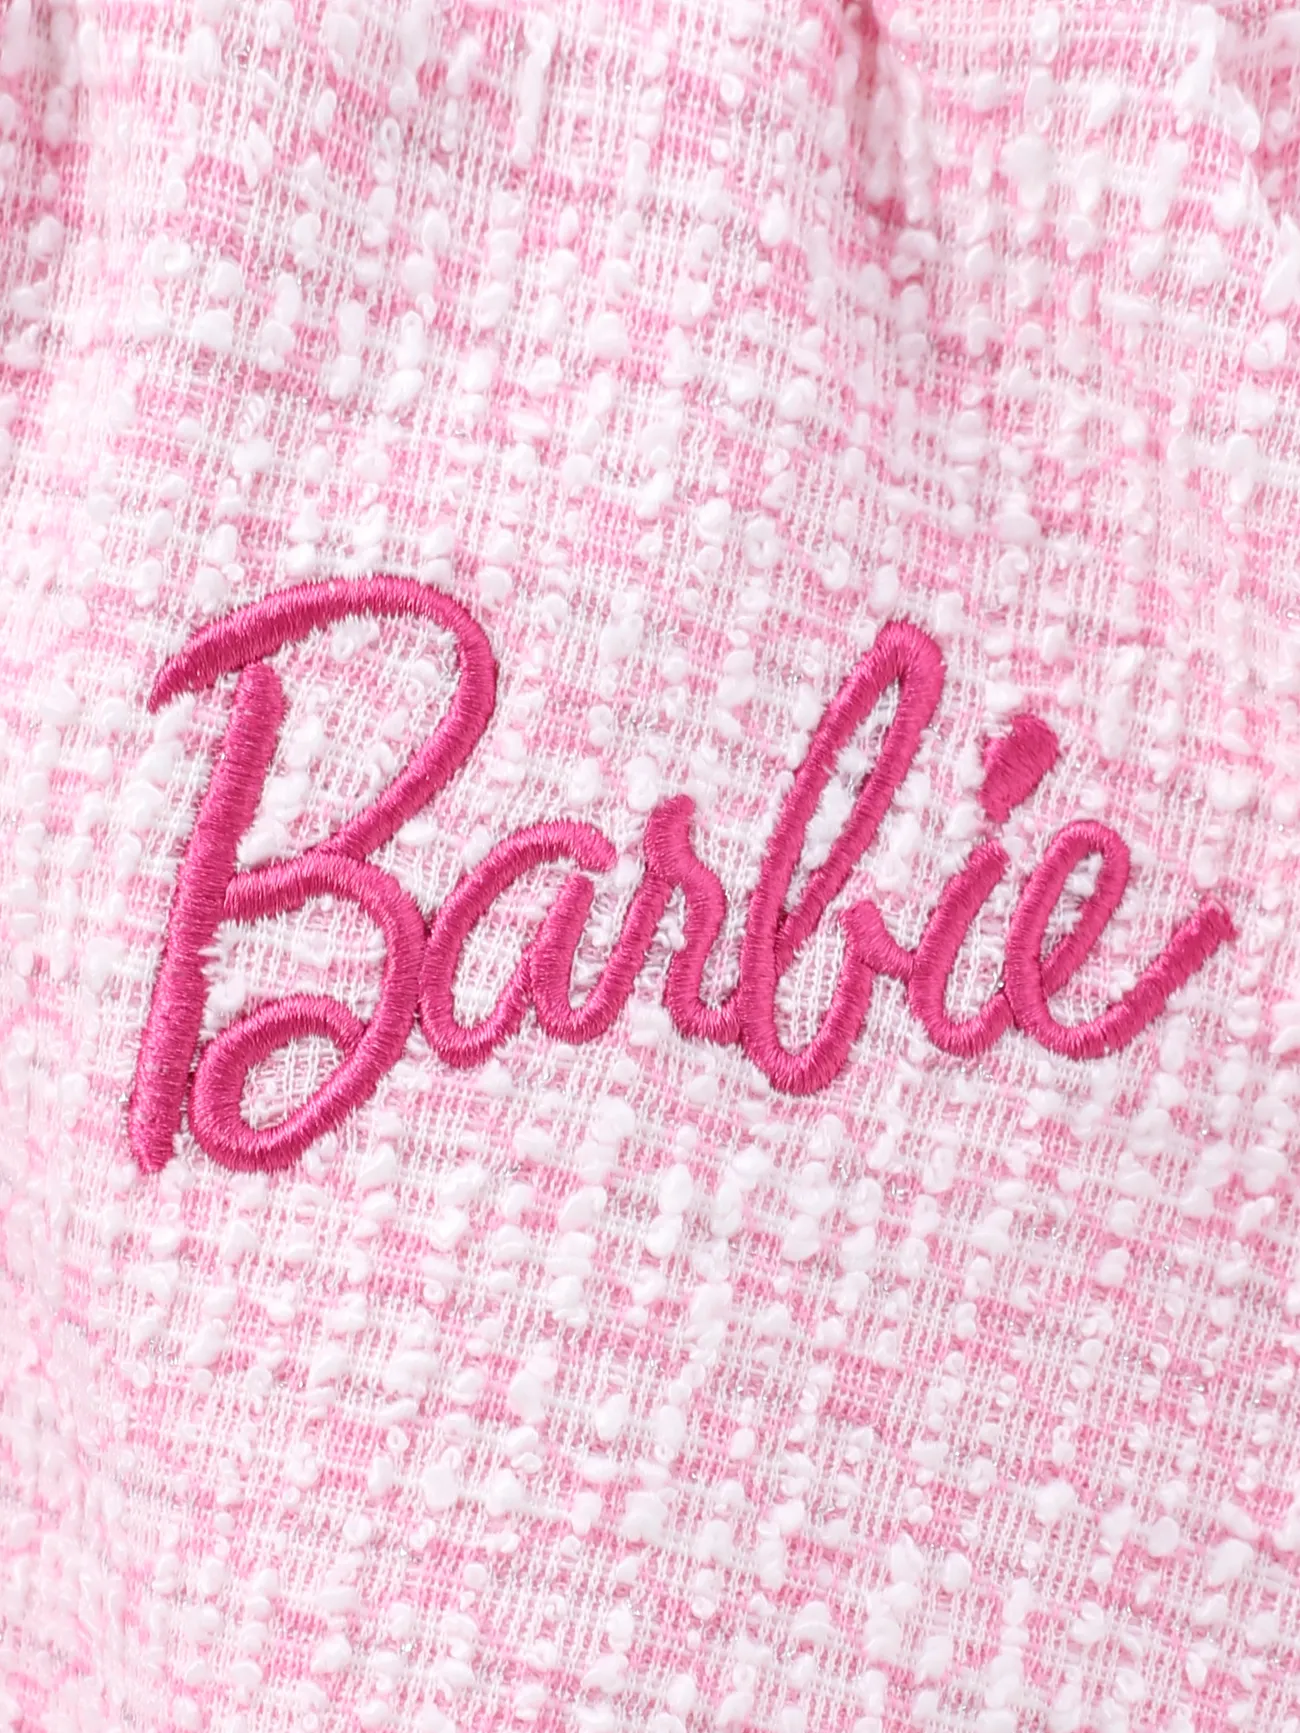 Barbie Toddler/Kid  Girl Character Print Sweet Secret Button Top or Dress  incarnadinepink big image 1